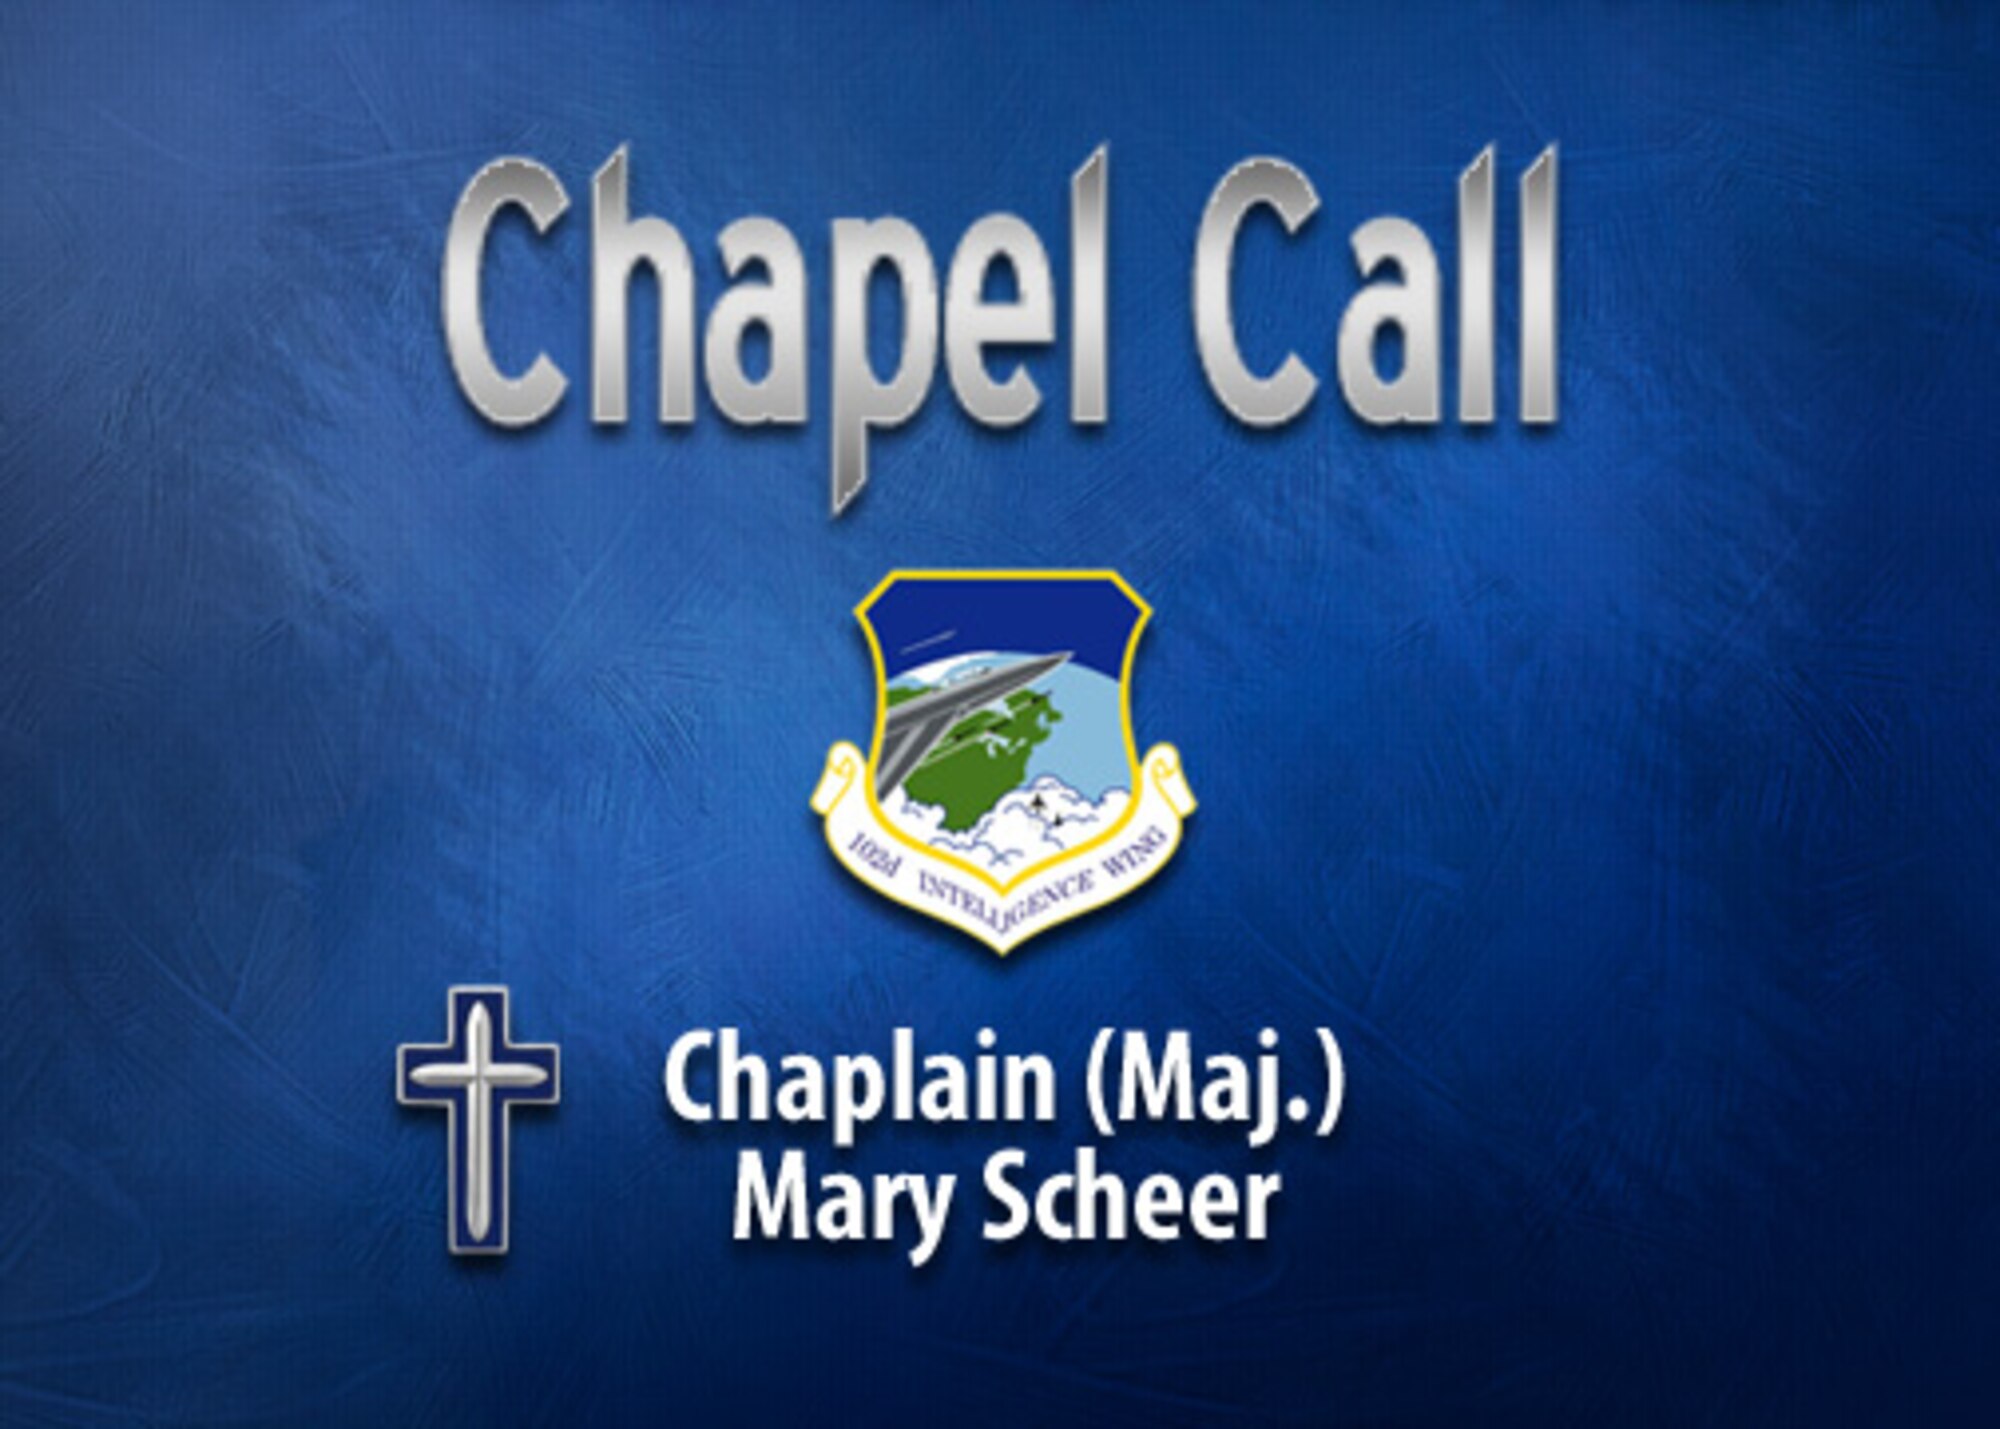 Chaplain (Maj.) Mary Scheer